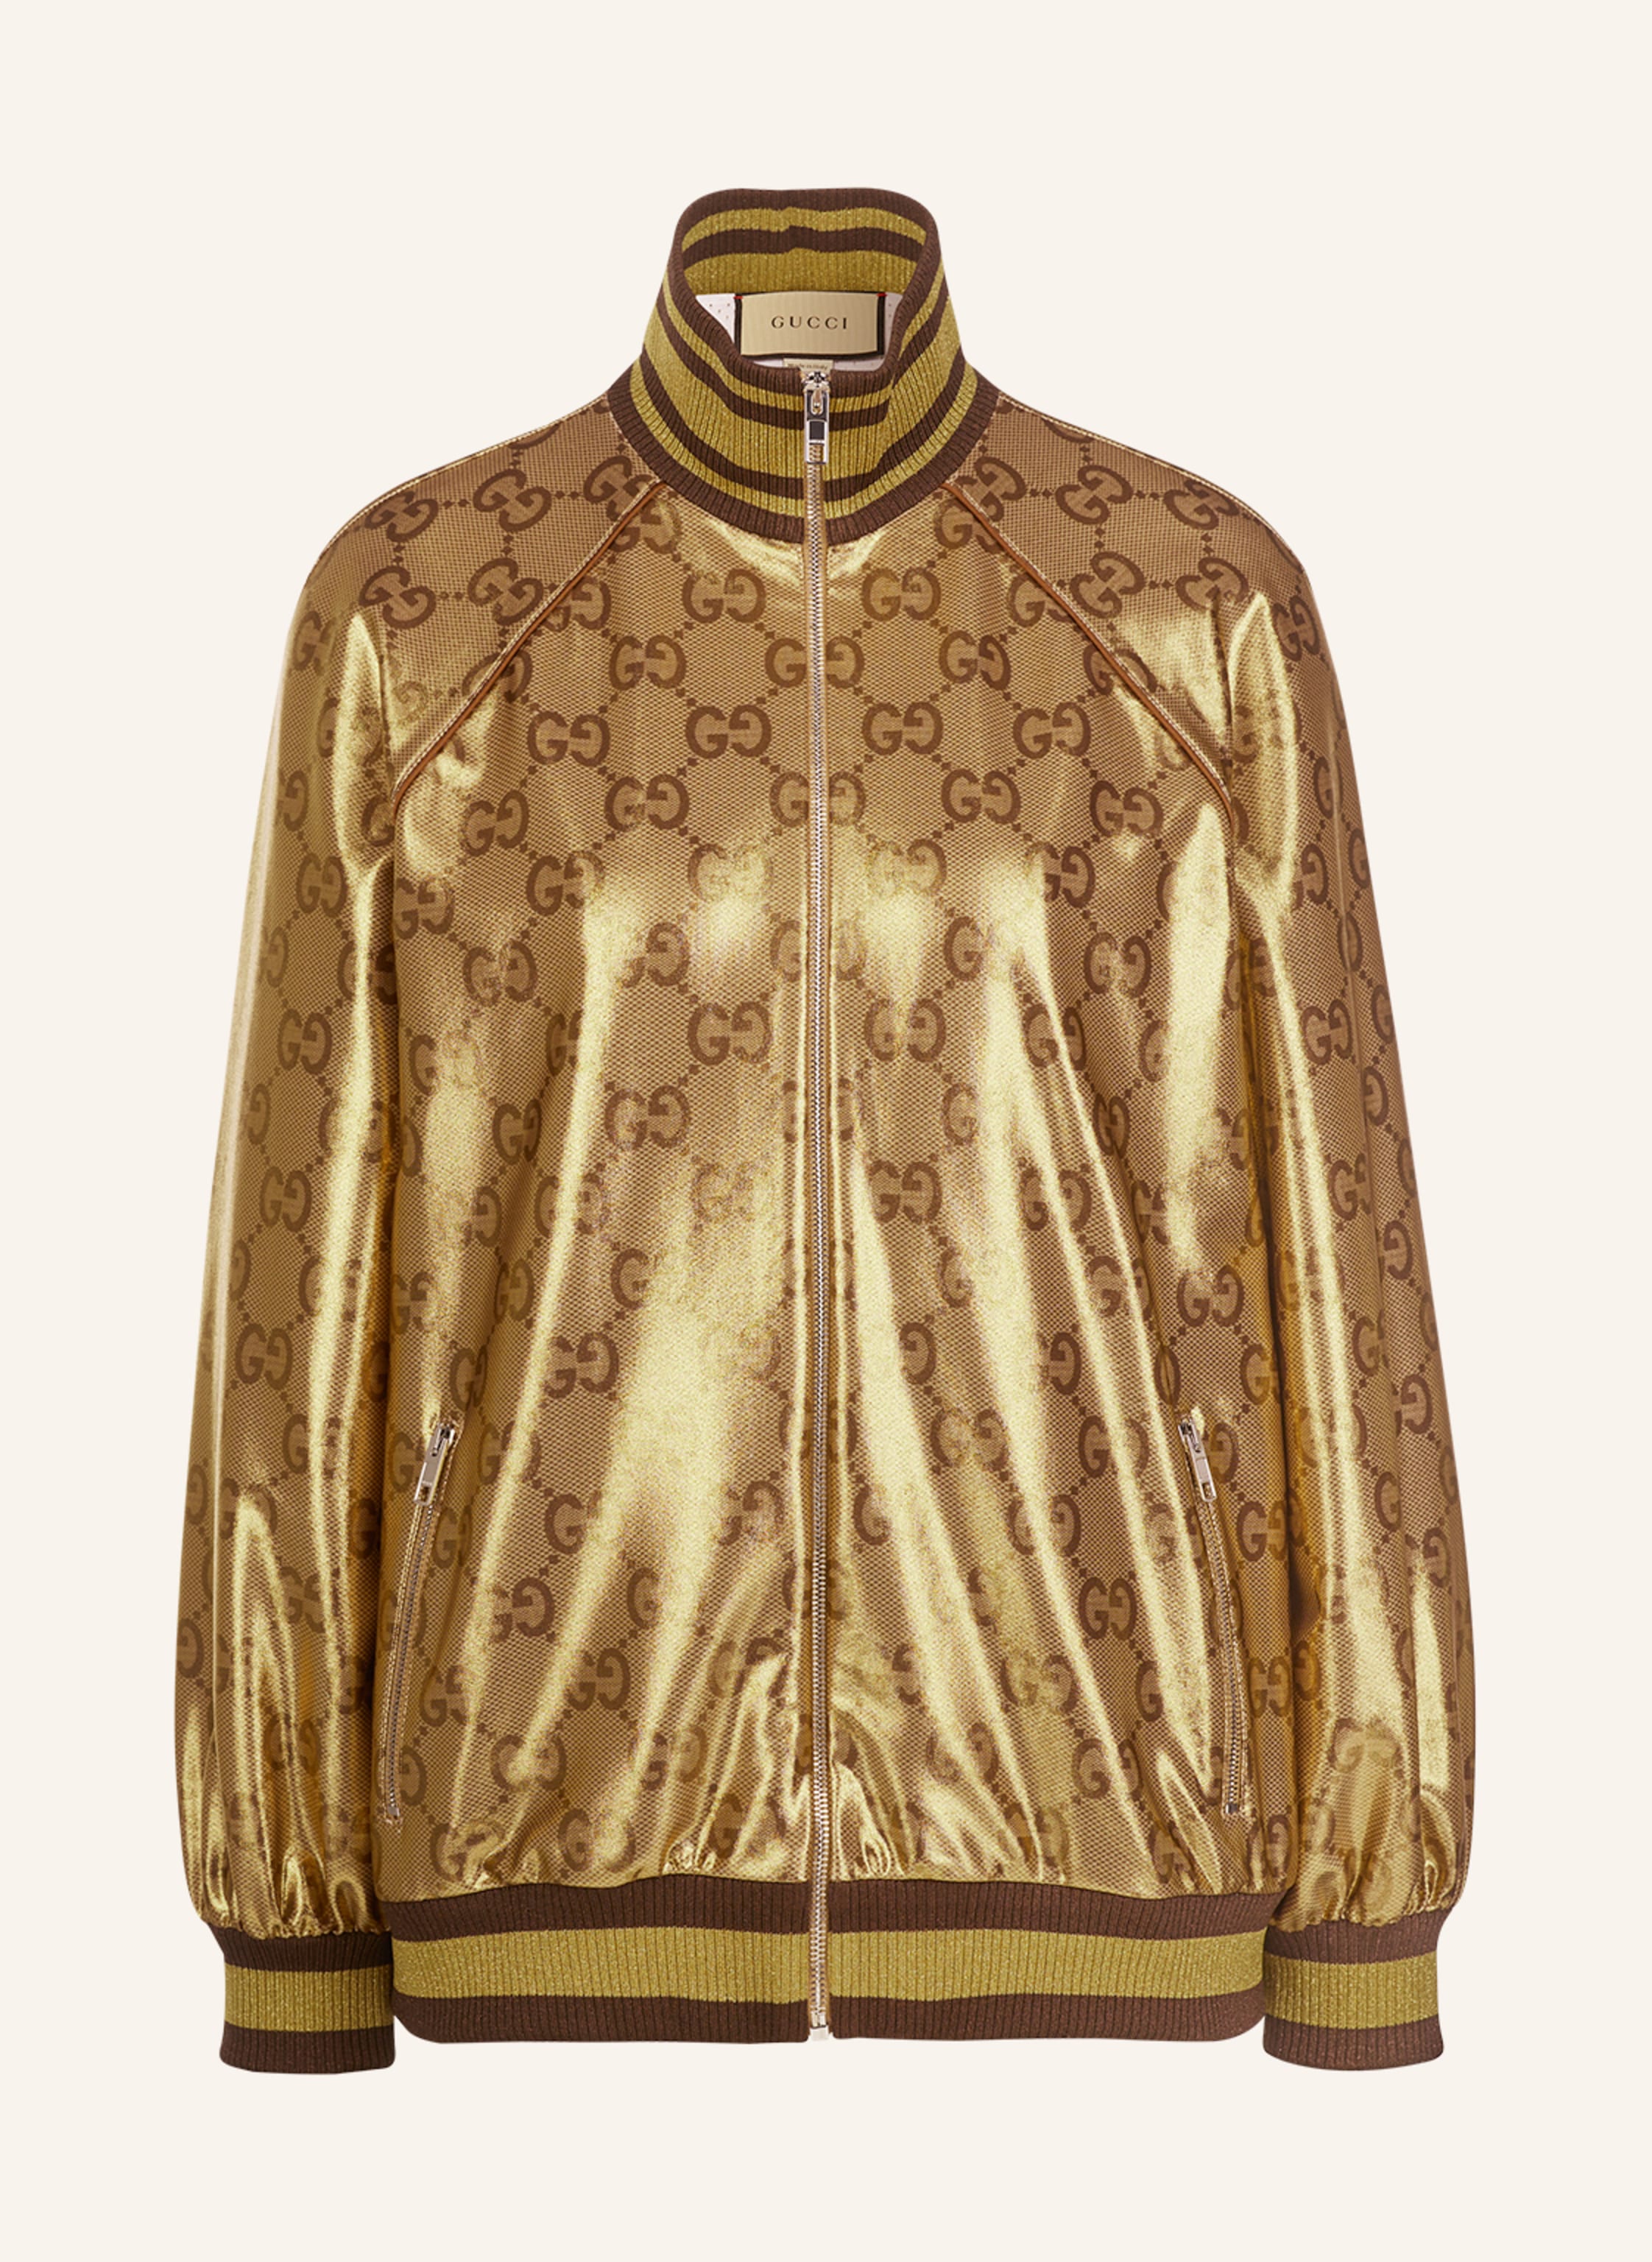 GUCCI Bomber jacket glitter thread gold/ brown